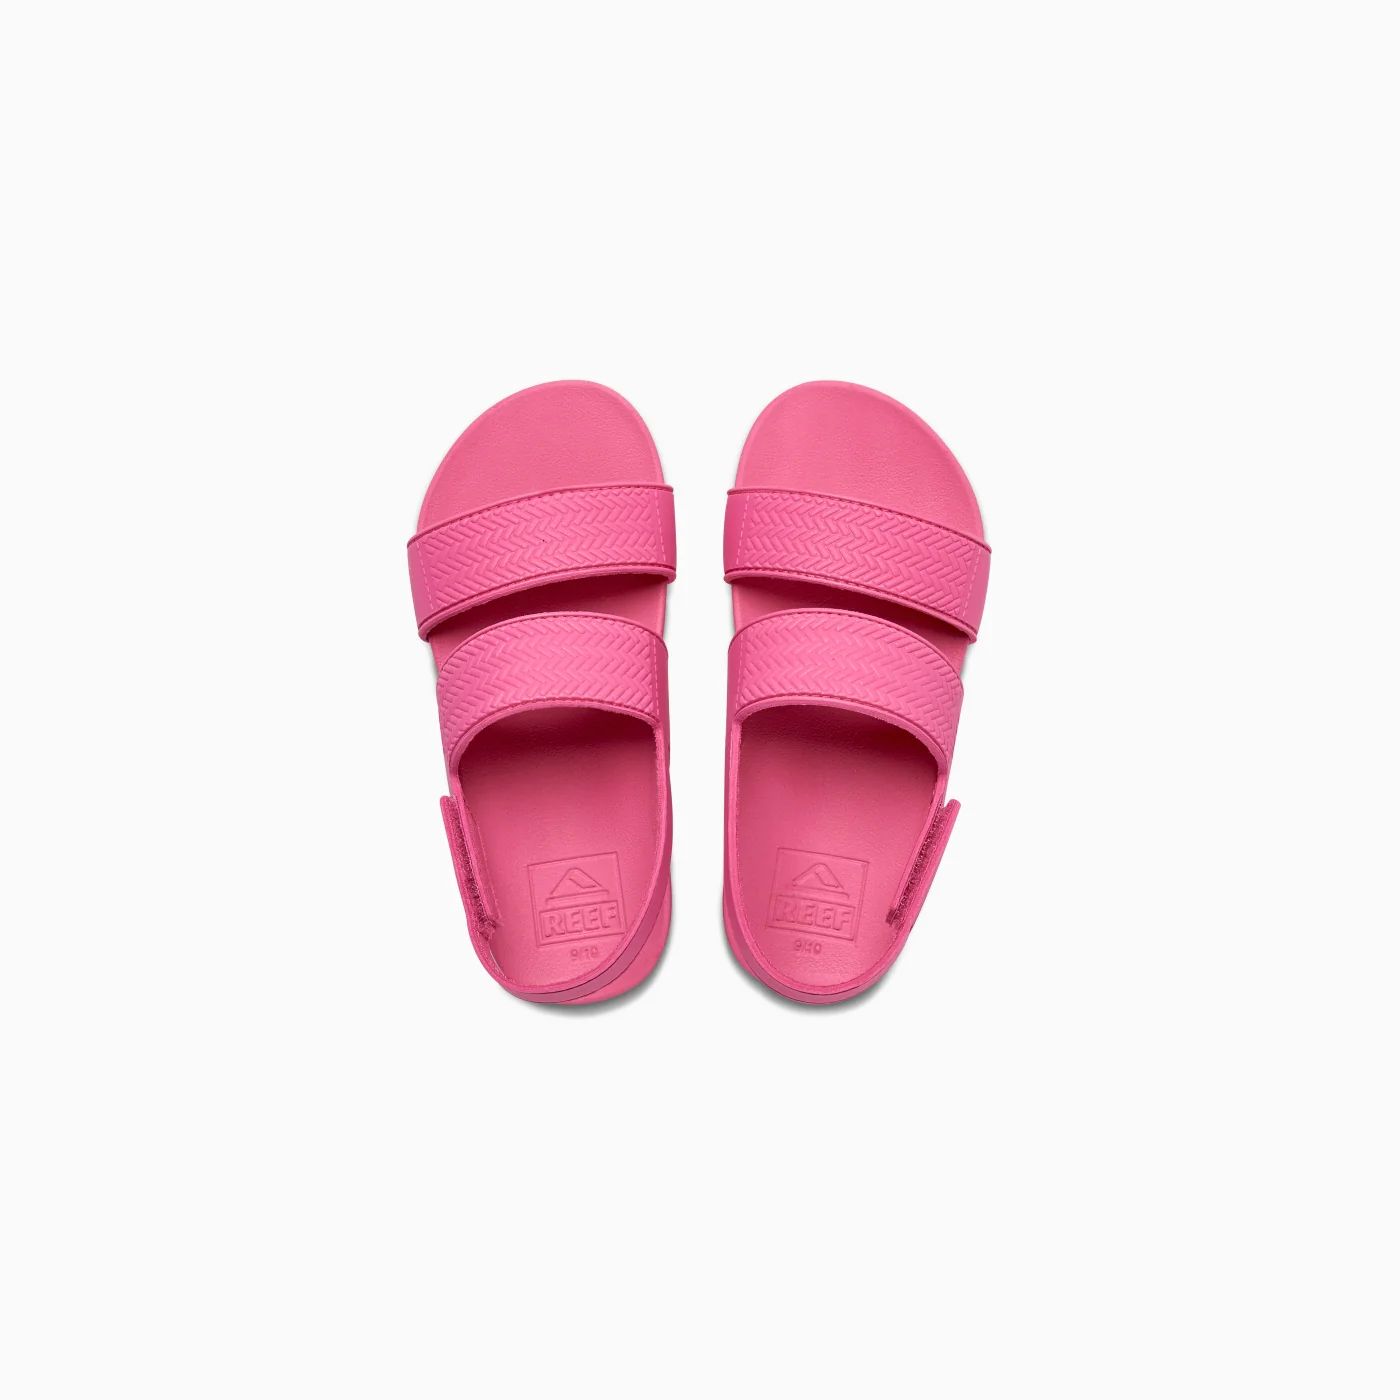 Toddler Girl's Water Vista Sandals in Pink | REEF® | Reef